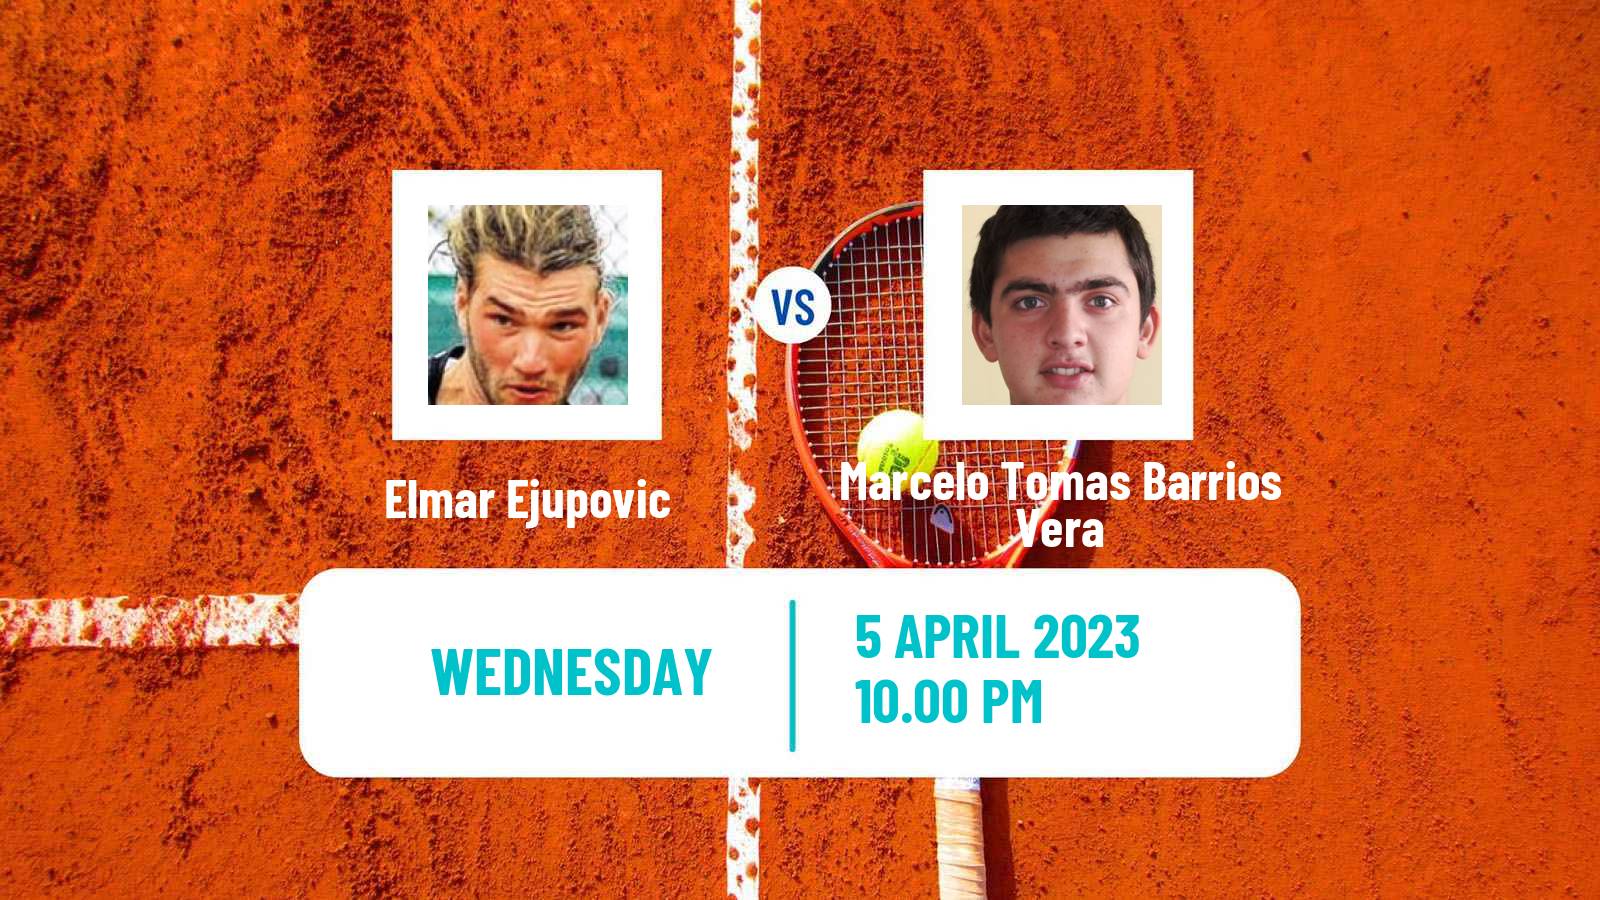 Tennis ATP Challenger Elmar Ejupovic - Marcelo Tomas Barrios Vera